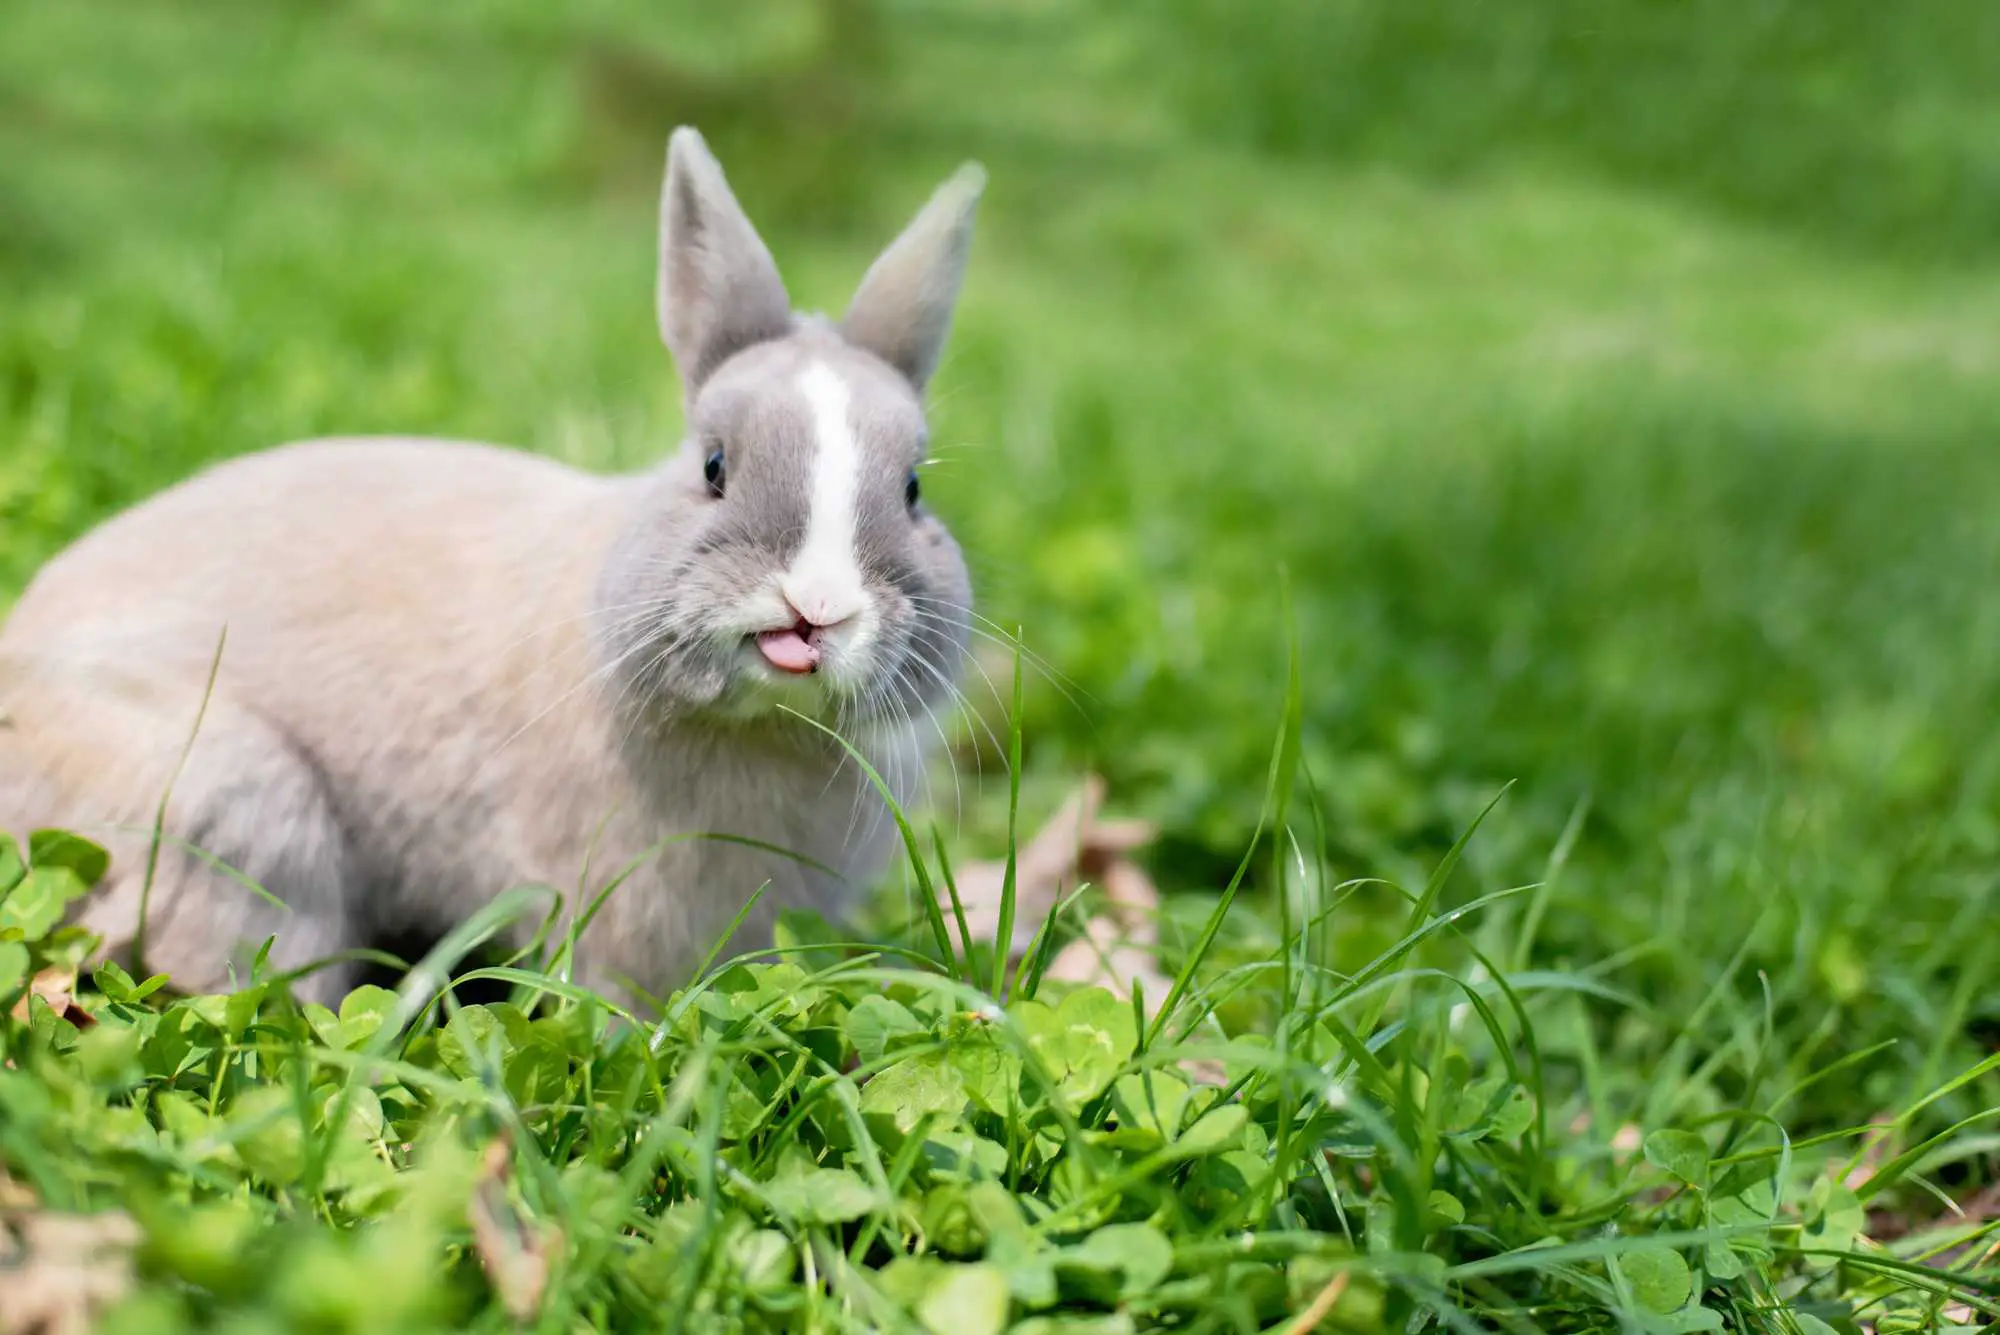 Why do rabbits lick things?